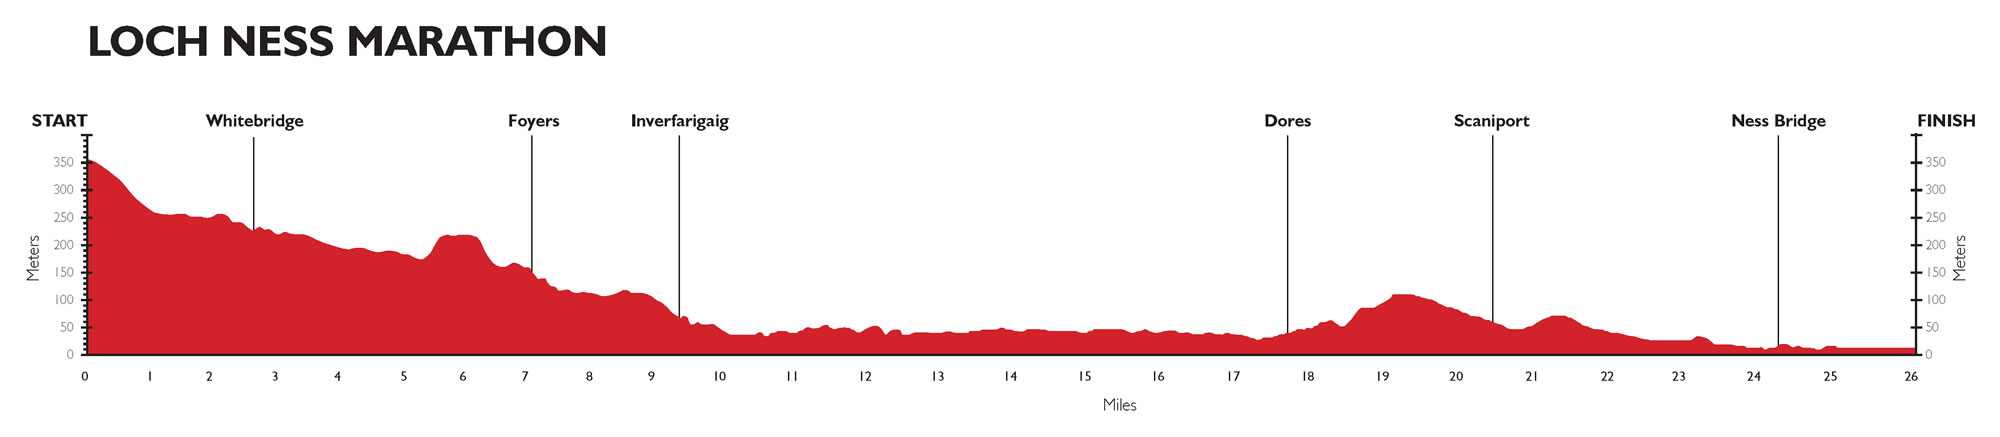 Loch-Ness-Marathon-Profile